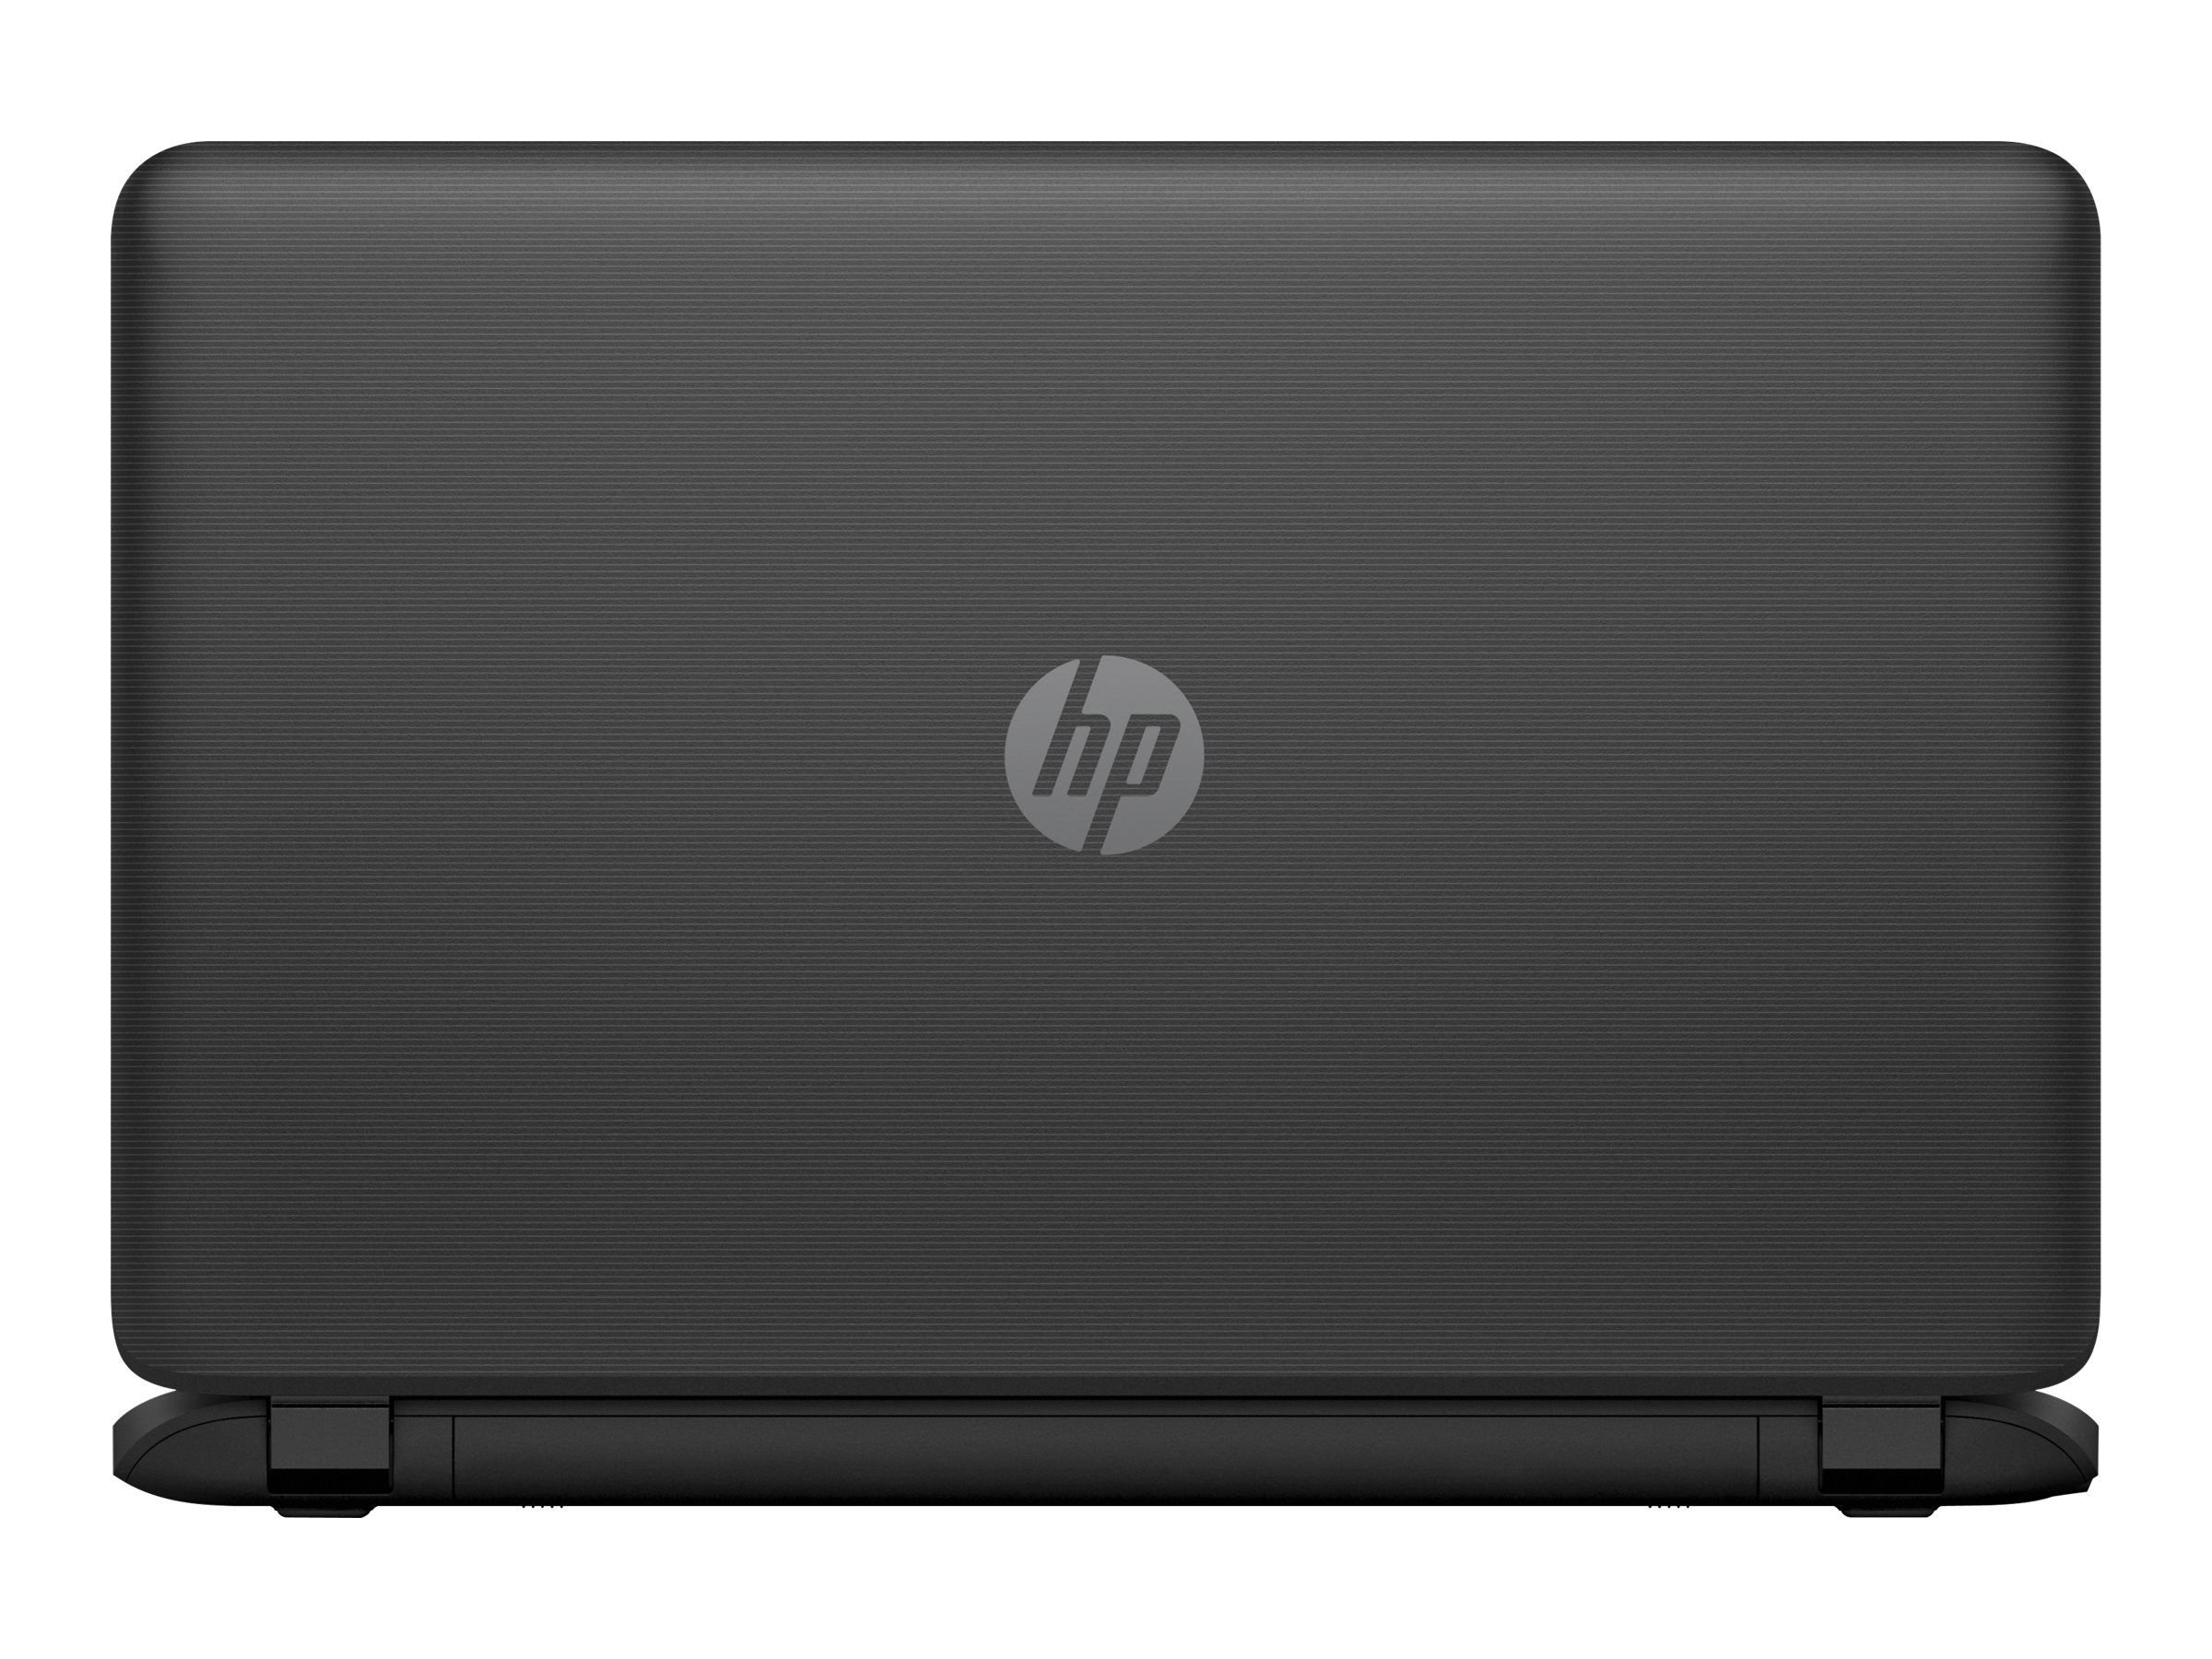 HP Laptop 17-p121wm - AMD A6 - 6310 / up to 2.4 GHz - Win 10 Home 64-bit - Radeon R4 - 4 GB RAM - 500 GB HDD - DVD SuperMulti - 17.3" 1600 x 900 (HD+) - HP textured linear pattern in black - kbd: US - image 4 of 5